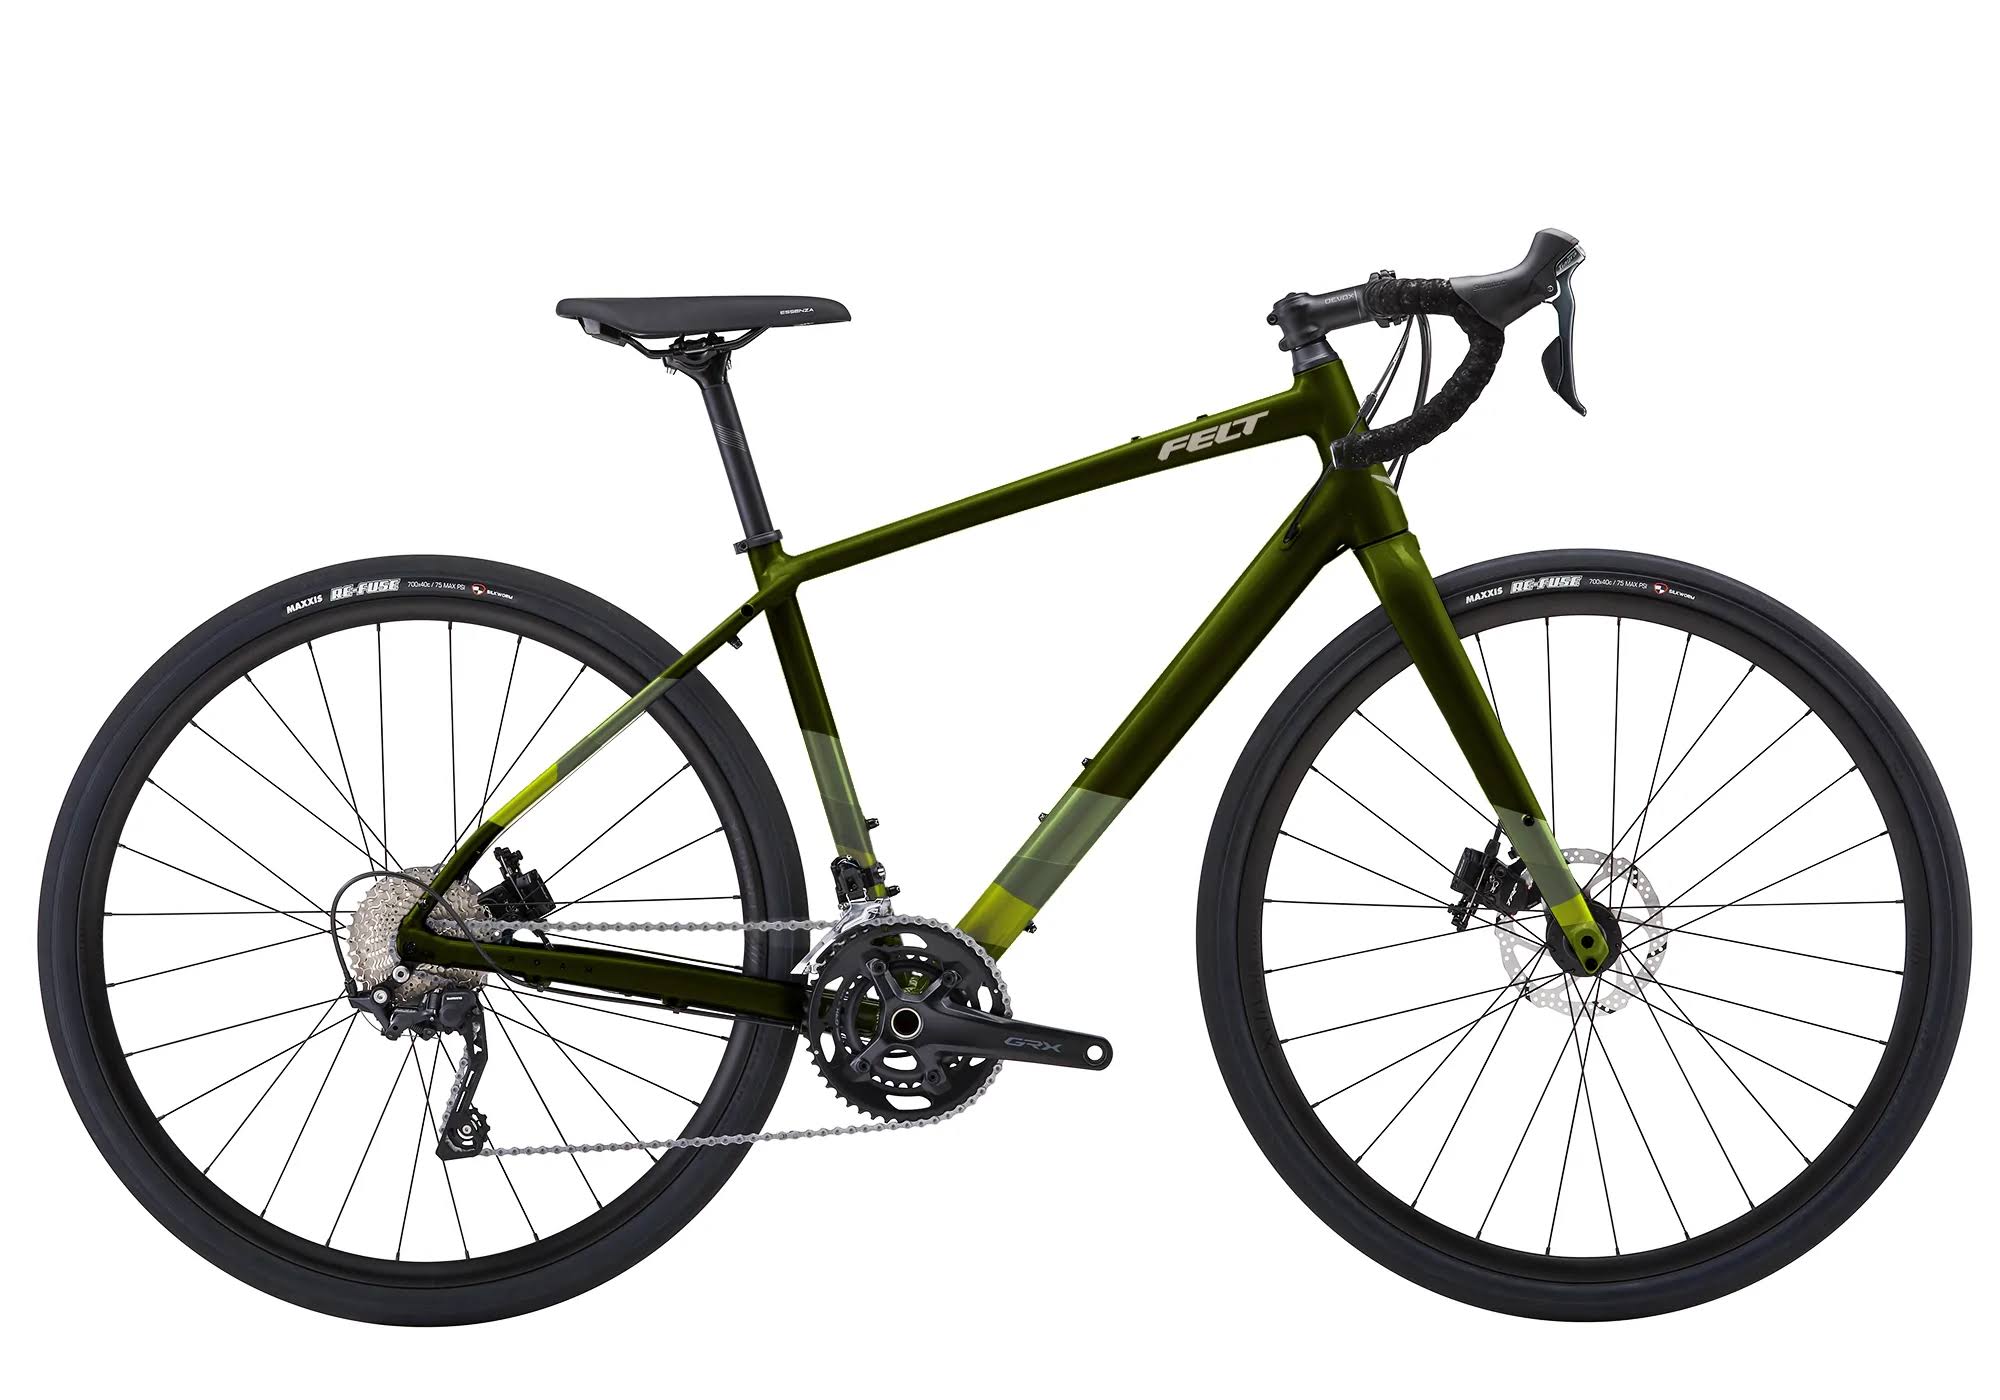 Felt - Broam | 40 GRX 400 - Seaweed, 56 | BikeExchange Gravel Bike Green L